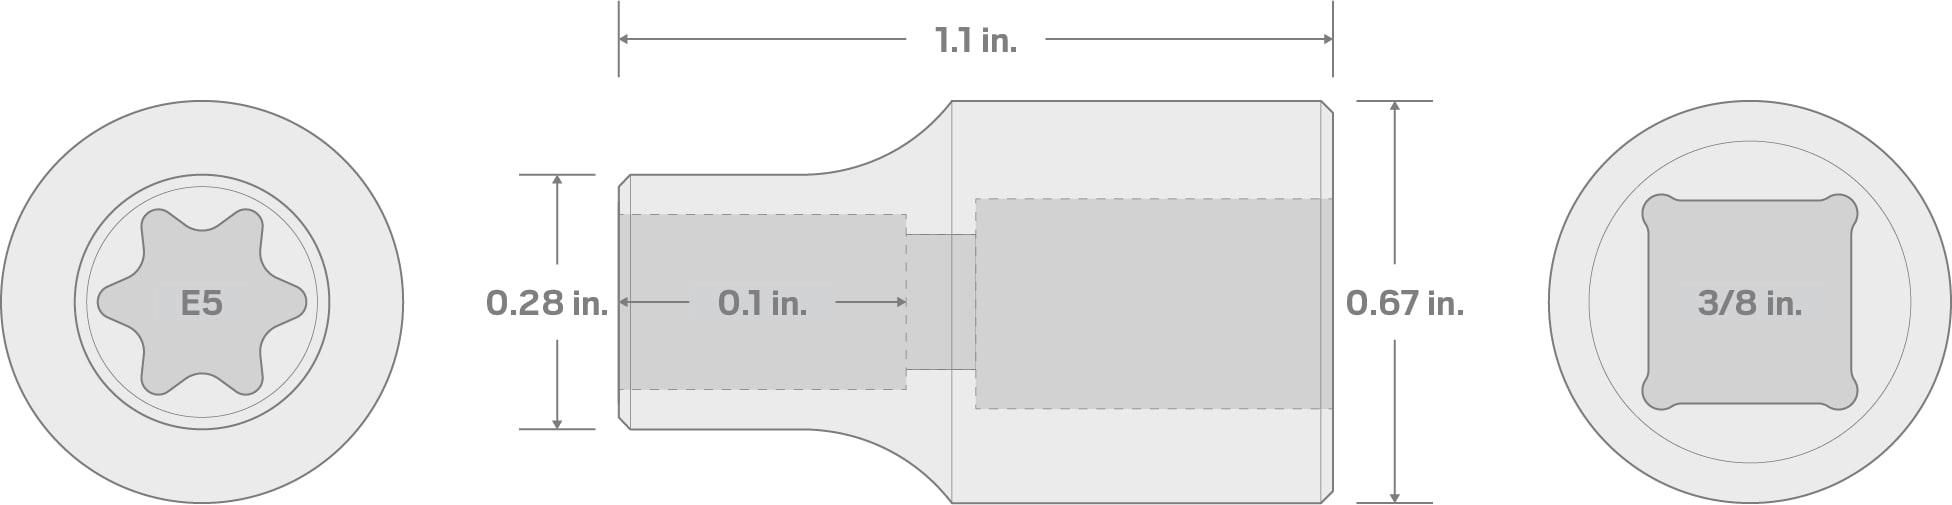 Specs for 3/8 Inch Drive x E5 External Star Socket